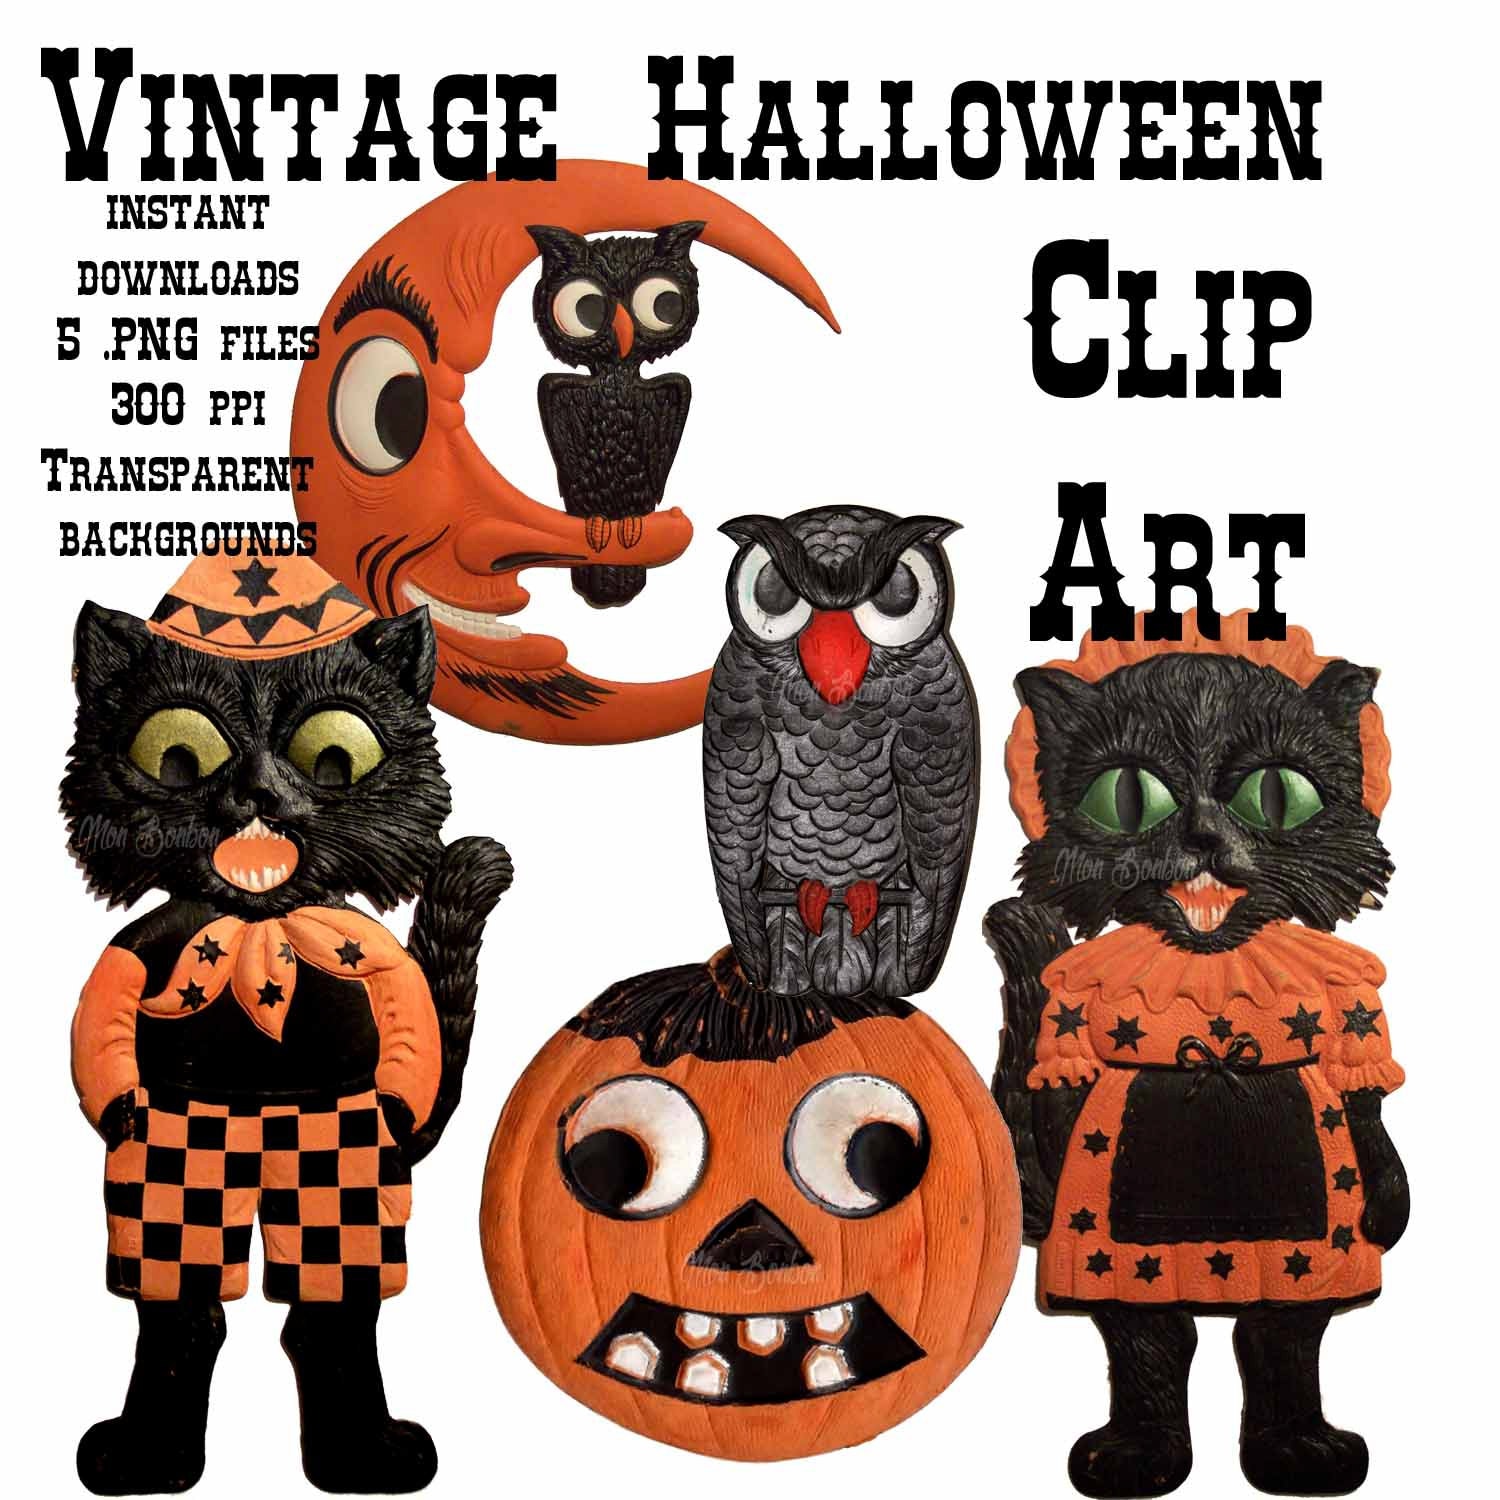 5 Vintage Halloween Clip Art Images .PnG DIY by monbonbon